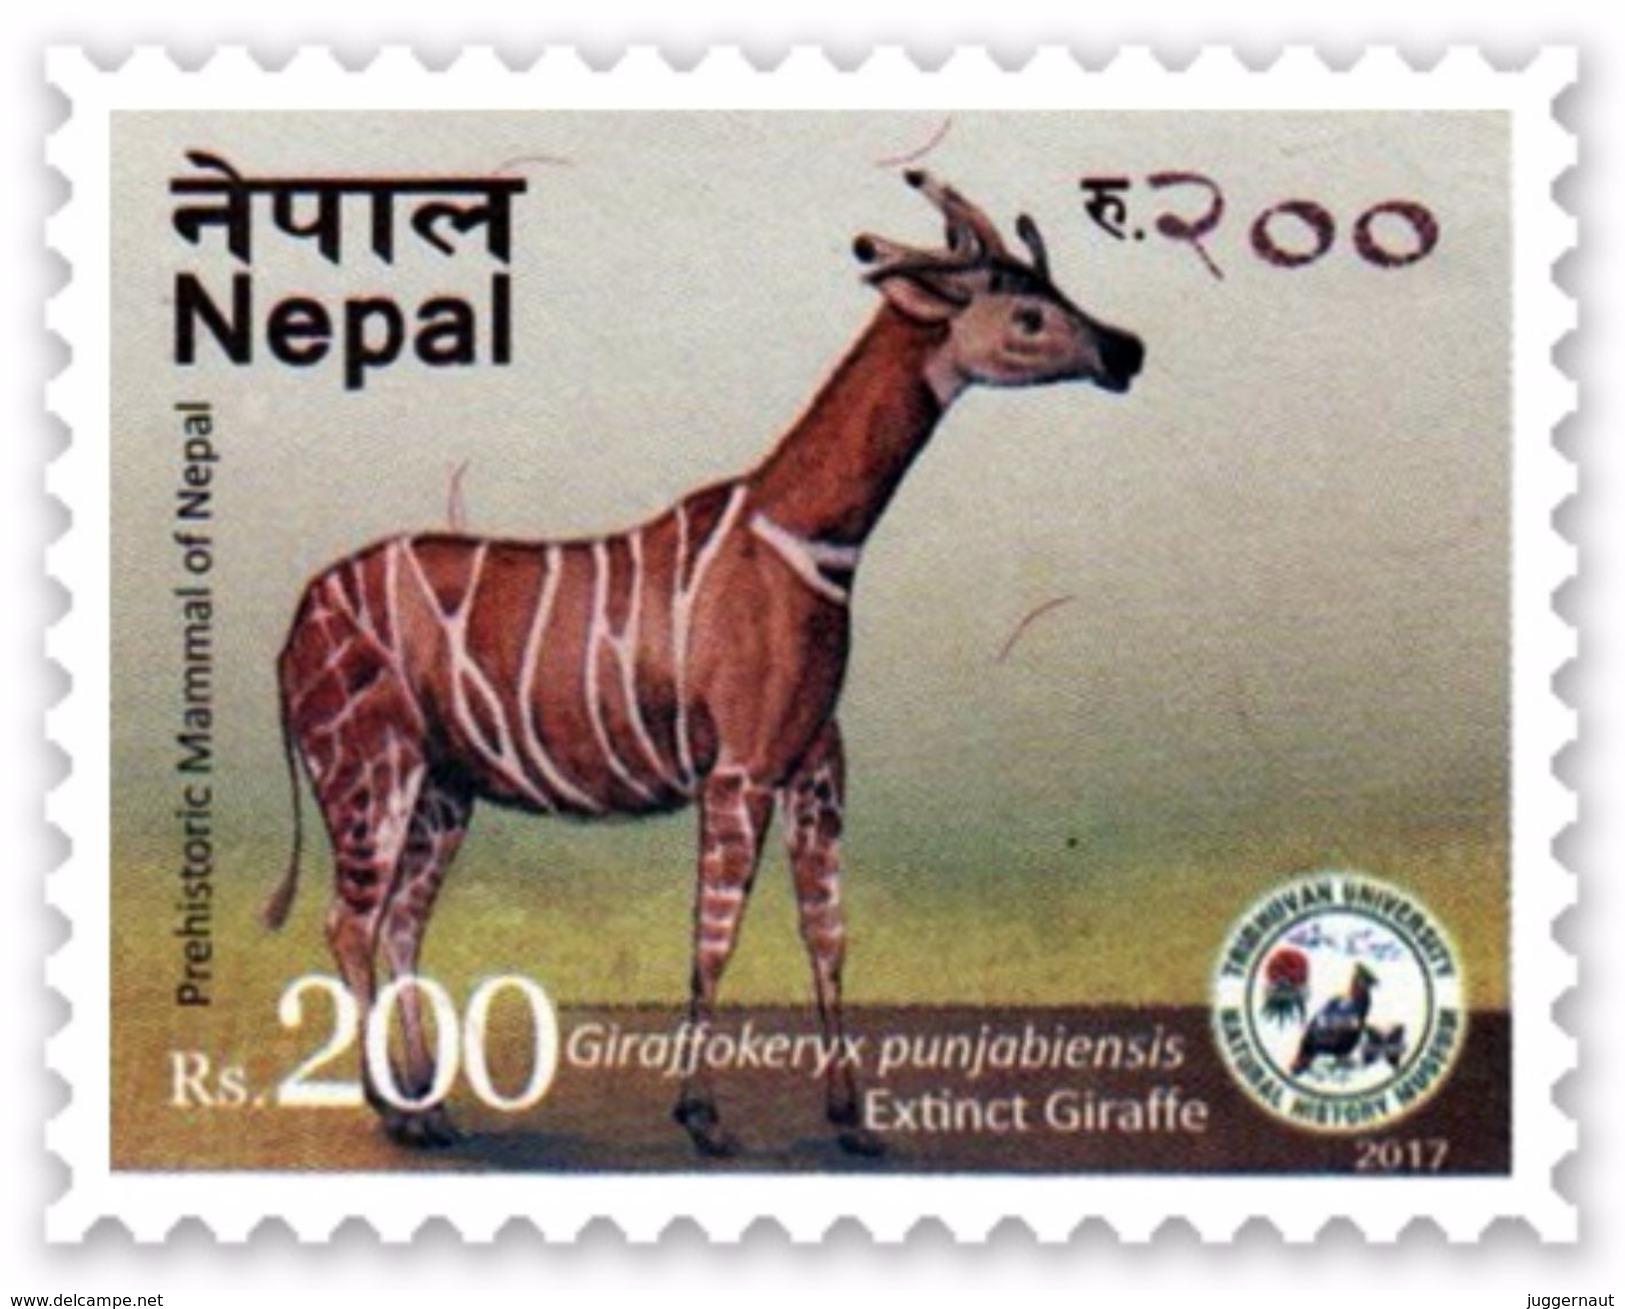 PREHISTORIC GIRAFFE Rs.200 ADHESIVE POSTAGE STAMP NEPAL 2017 MINT/MNH - Giraffen